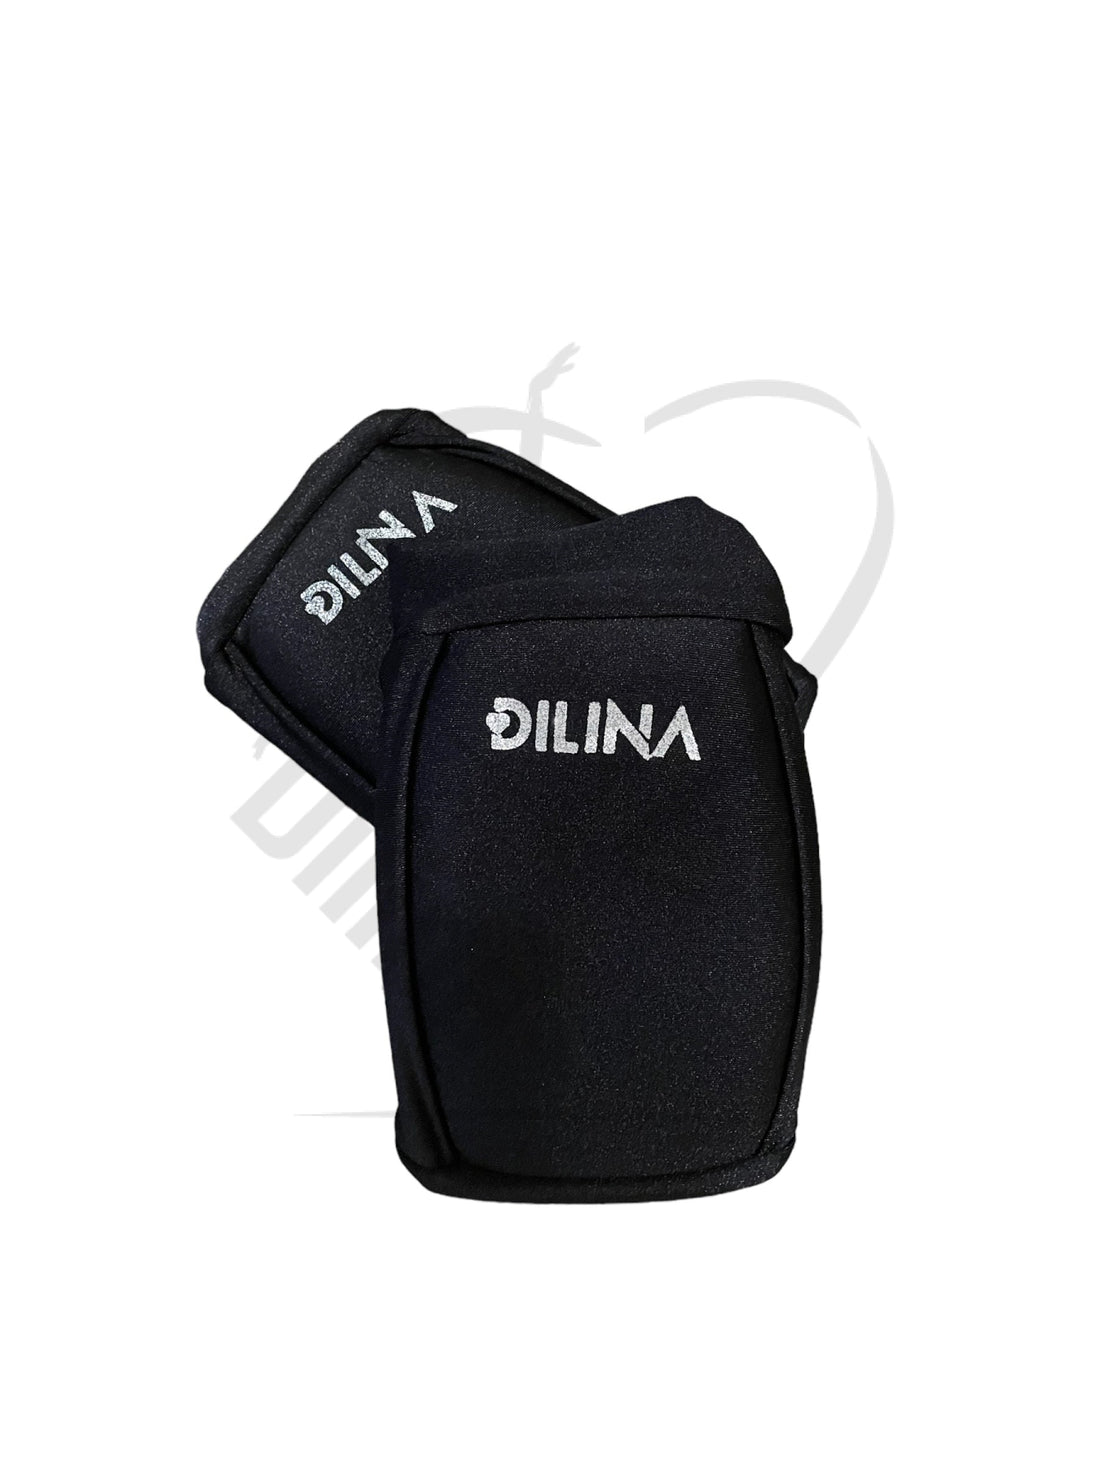 Dilina Knee Pad S / Black Protectors